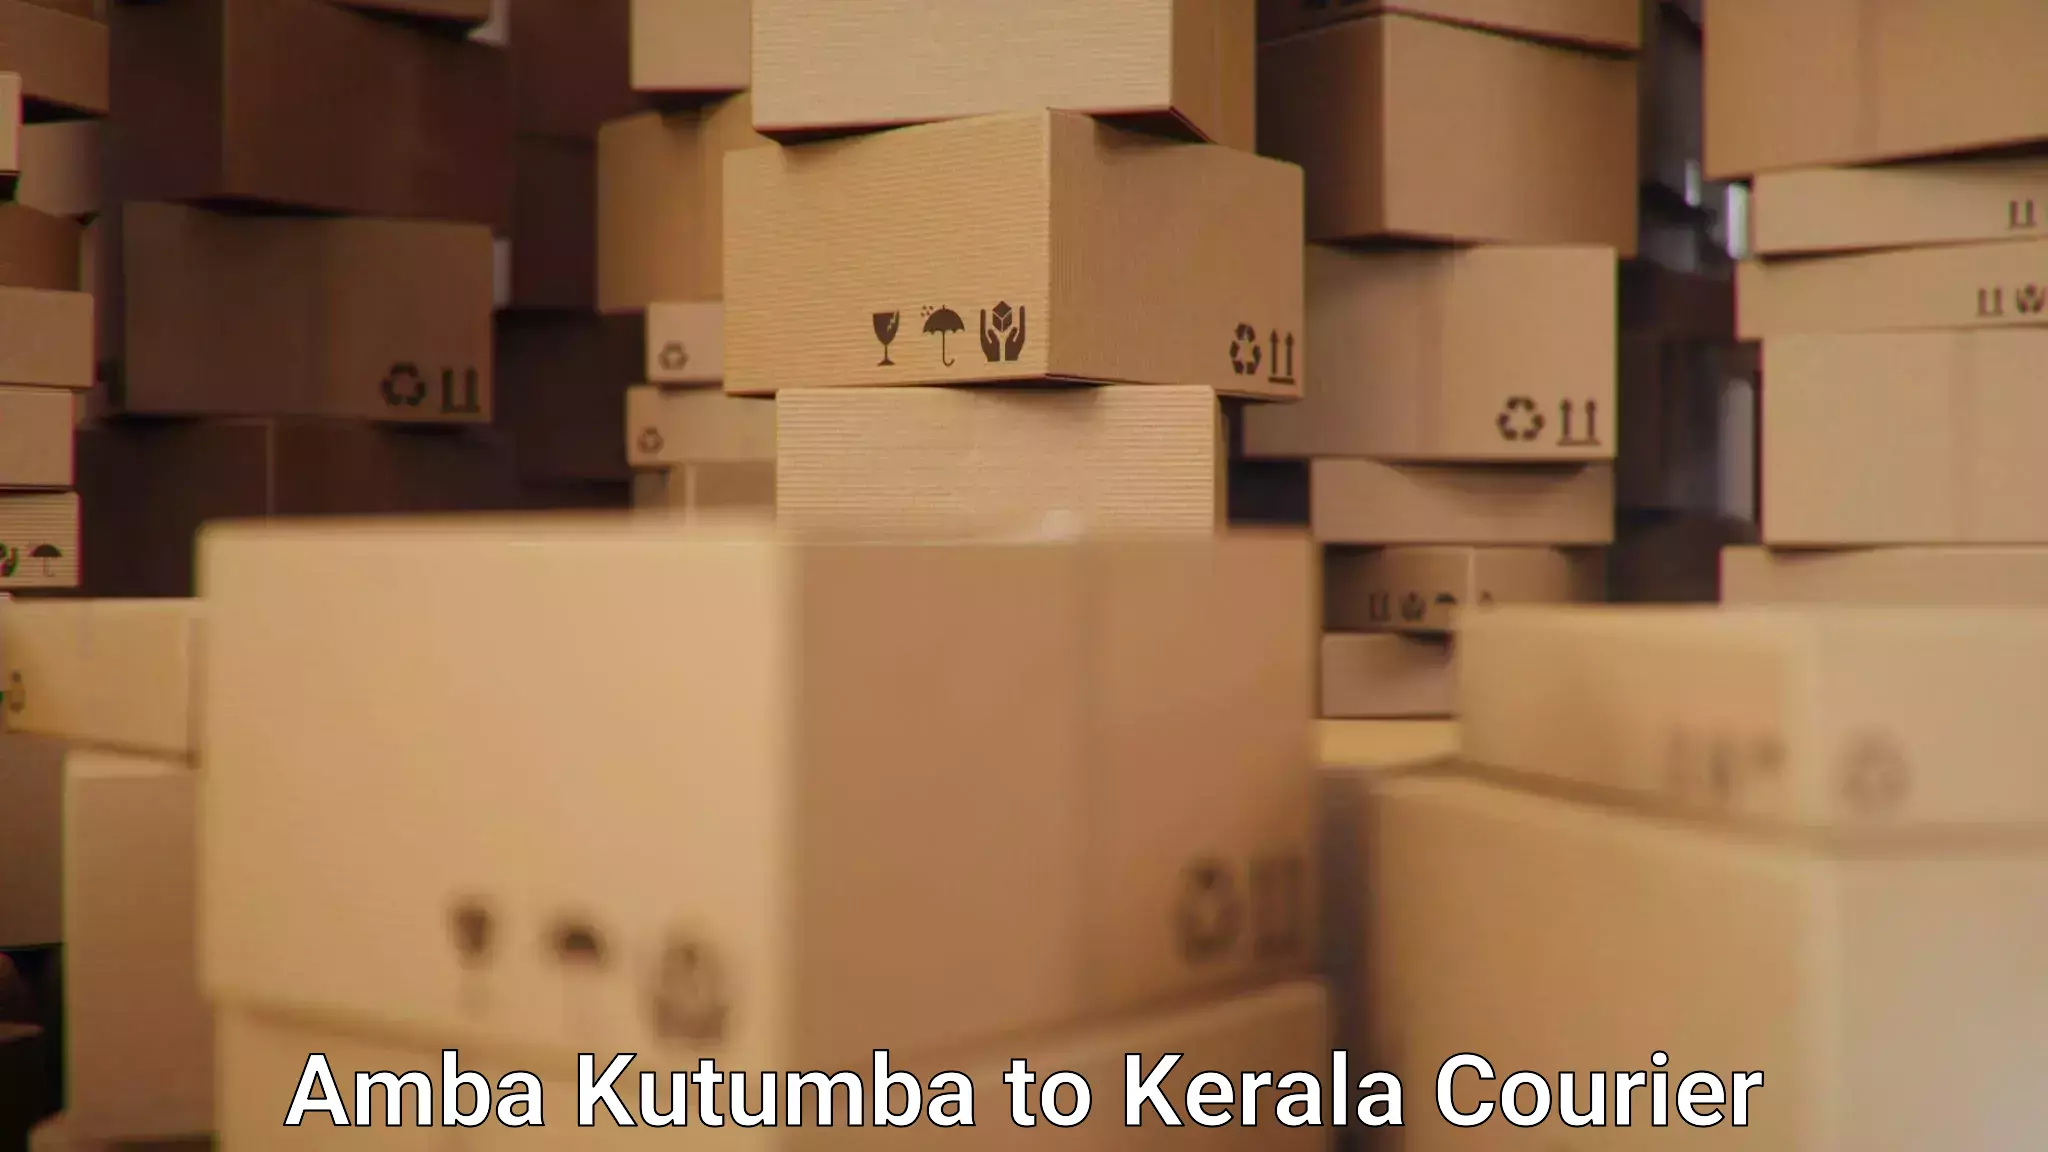 Express delivery capabilities Amba Kutumba to Cochin Port Kochi